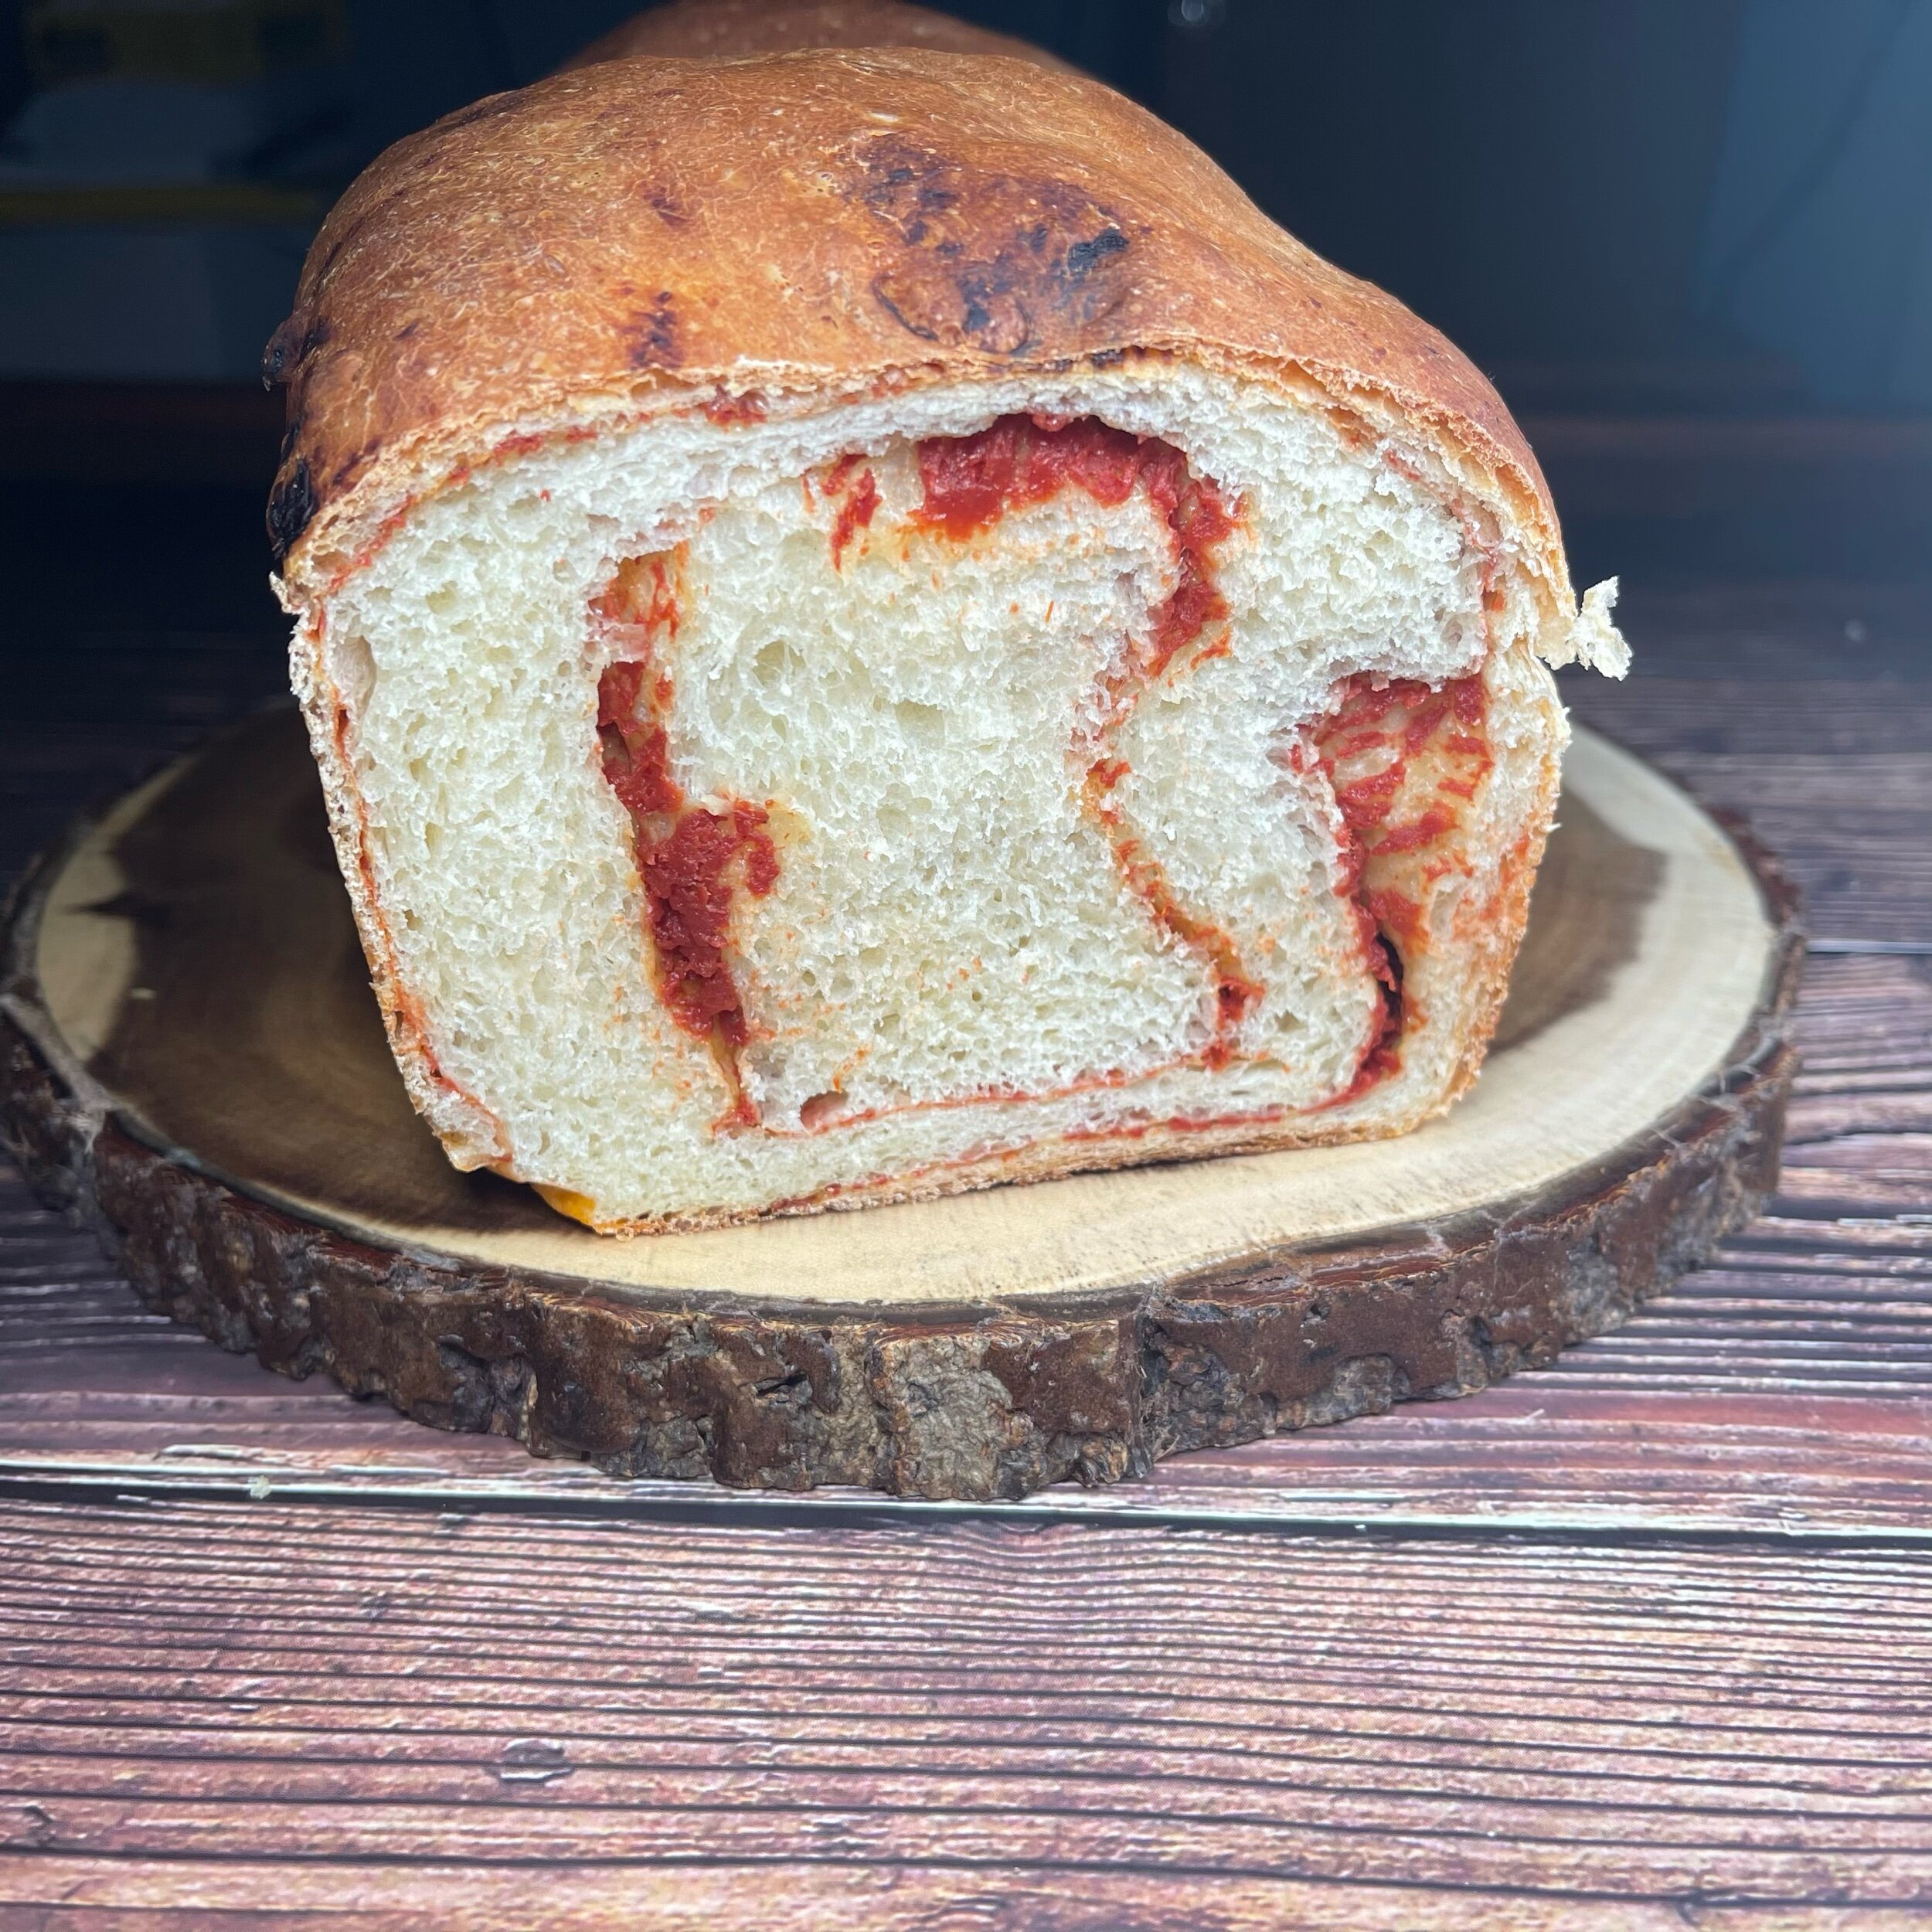 Crumb Shot of first slice of Tomato Swirl Bread